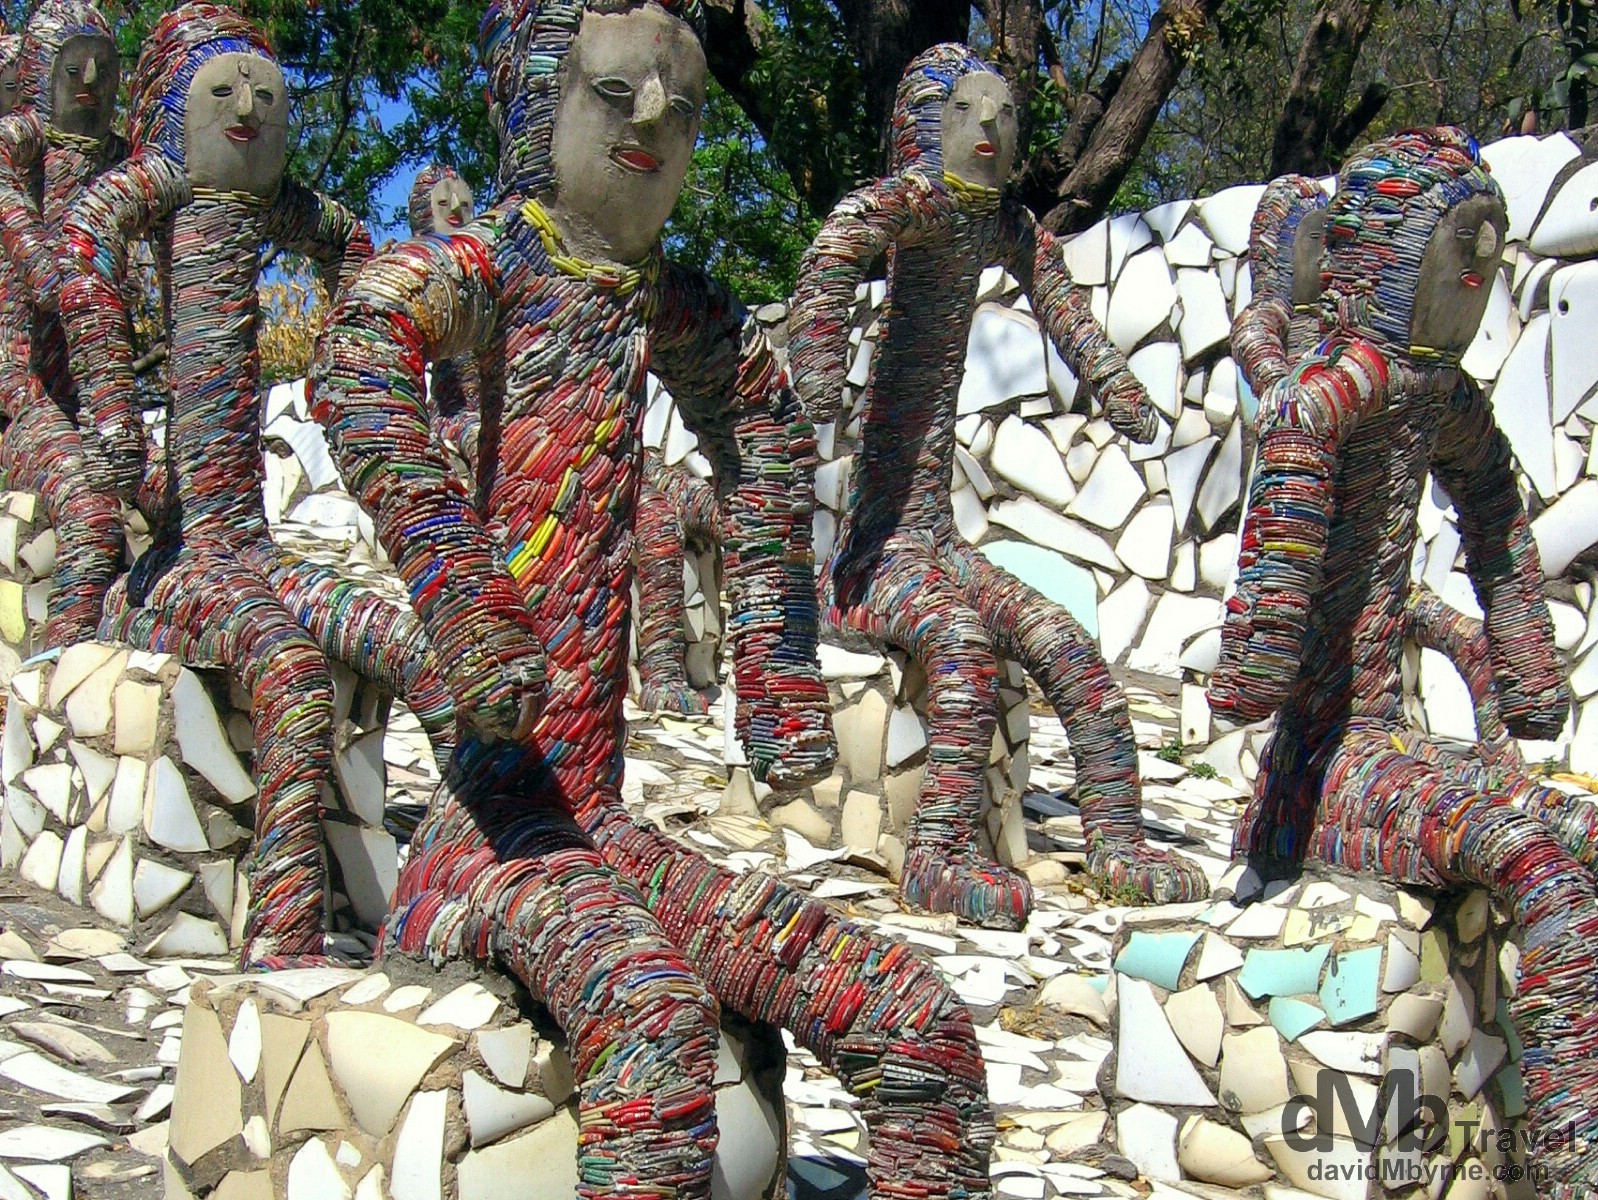 Sculptures in the Rock Garden in Chandigarh, Punjab, India. March 23, 2008.